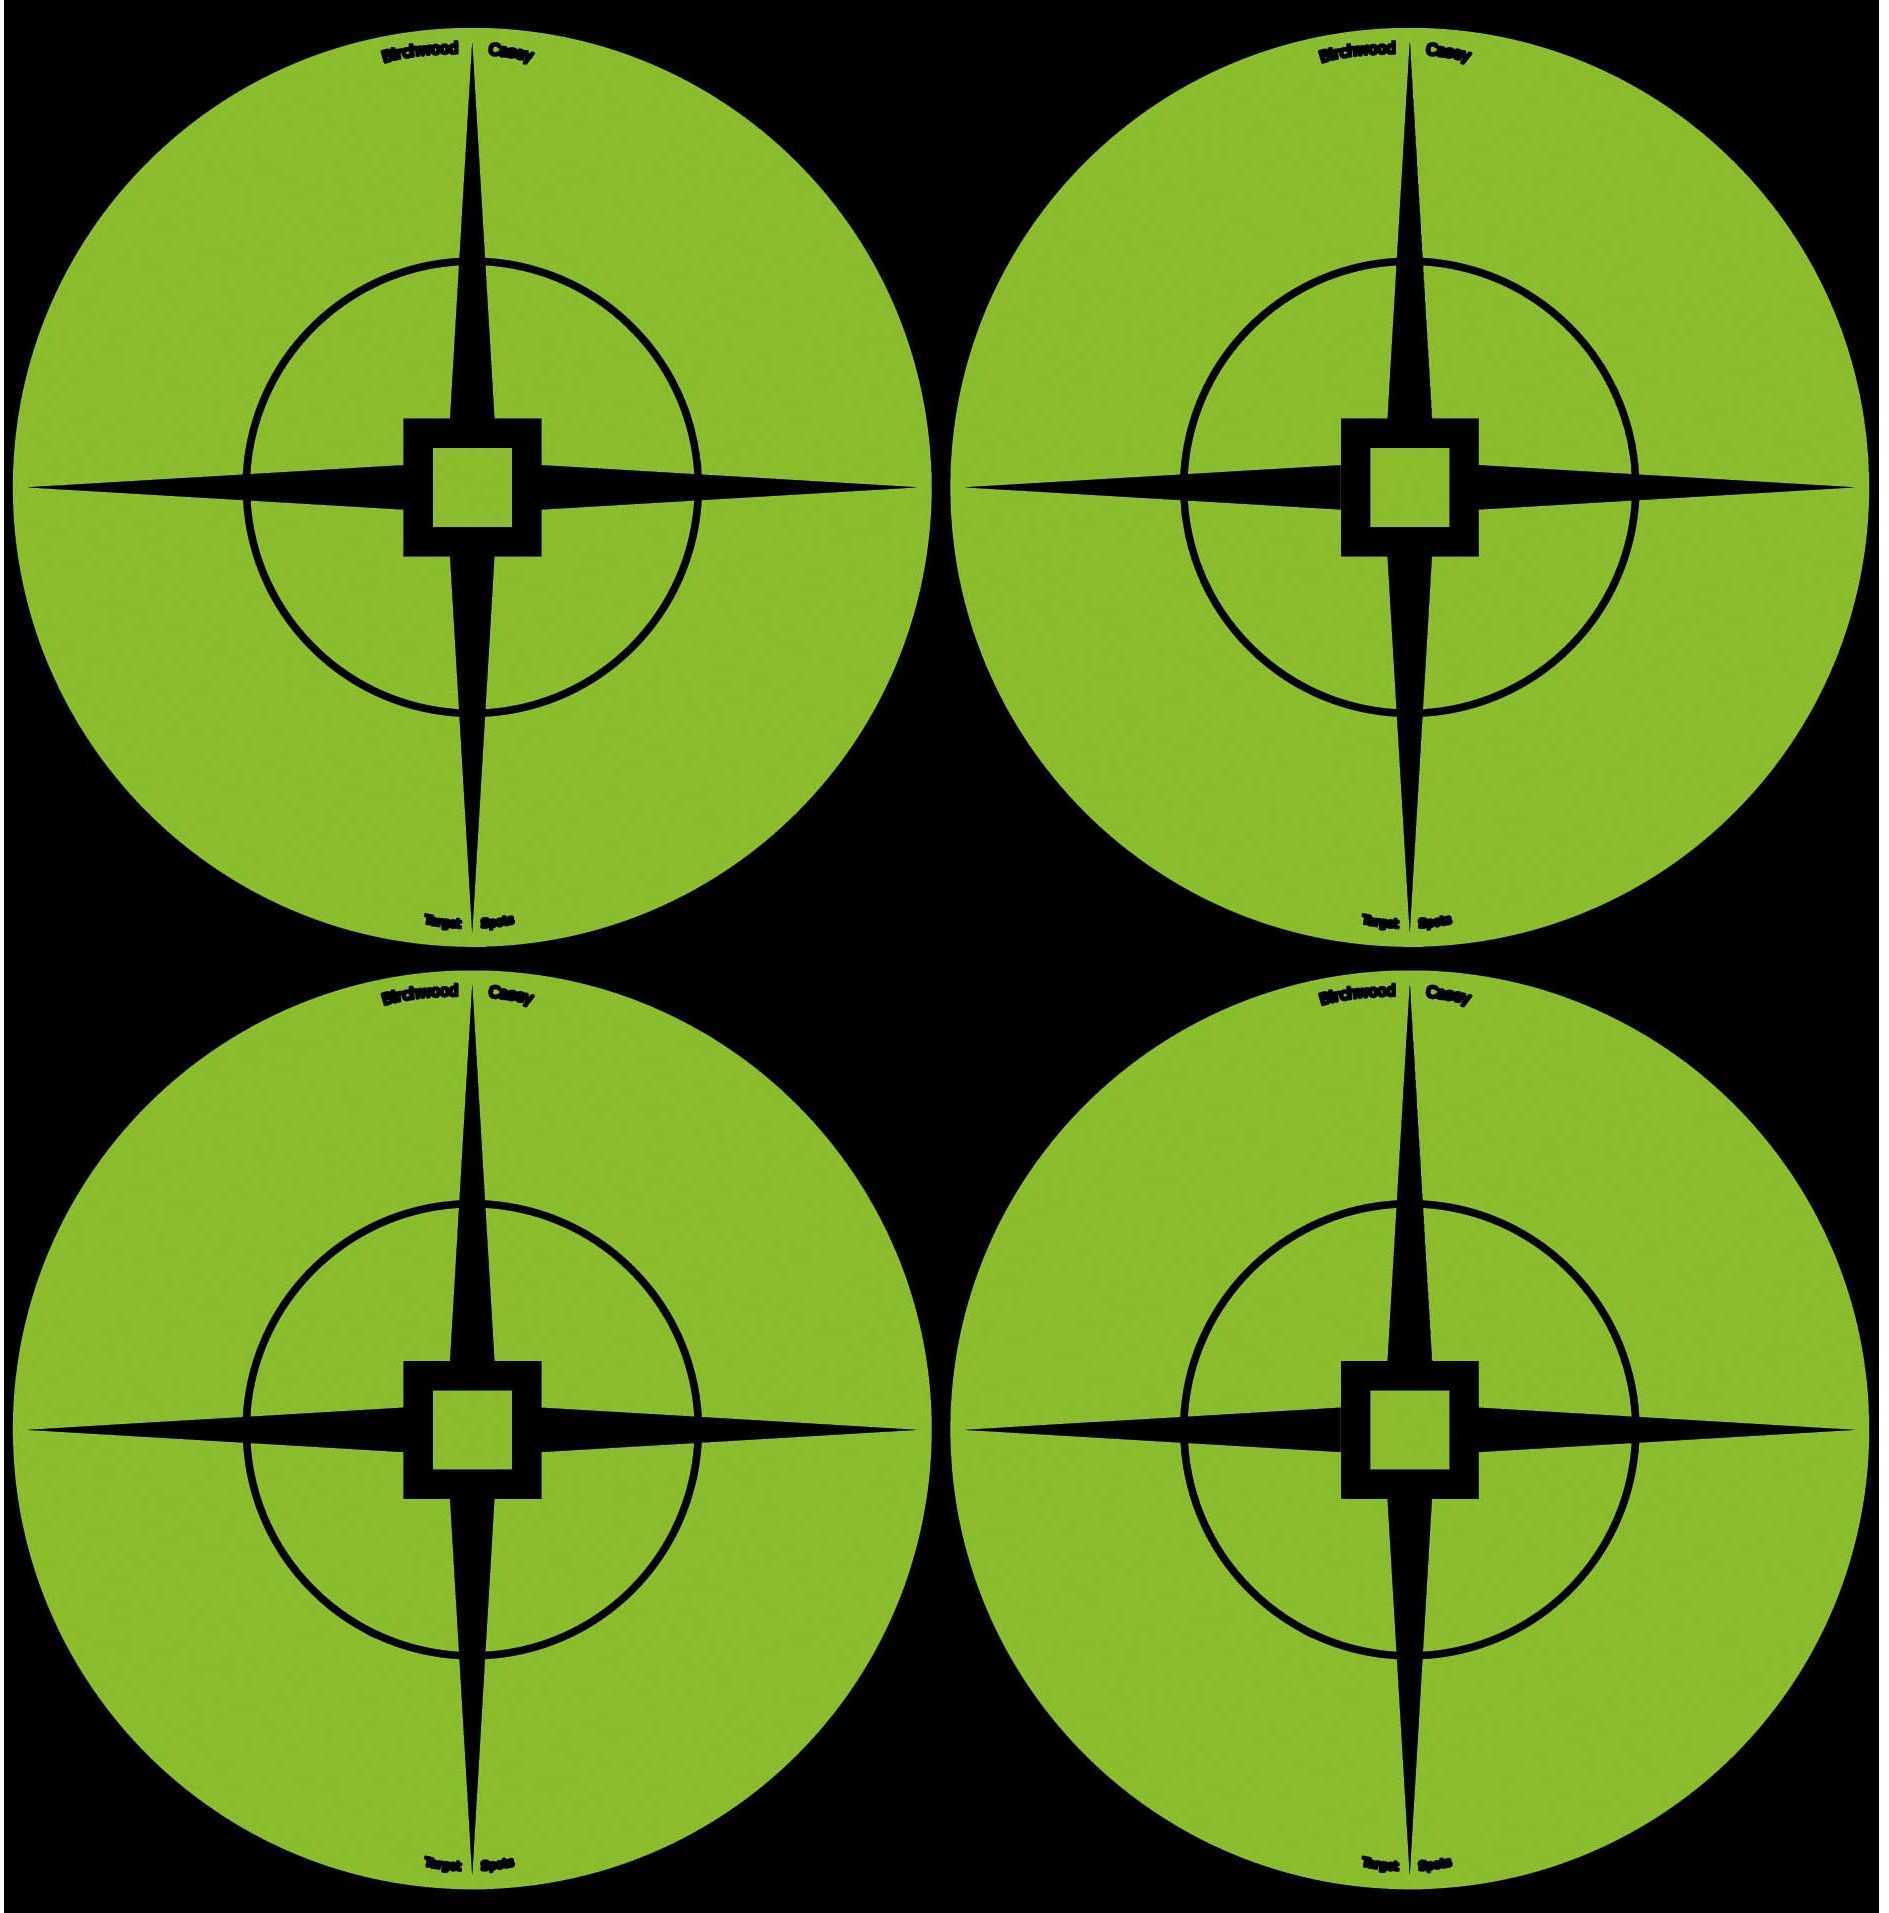 Birchwood Casey Targets 3" Green Spots - 40/Pack